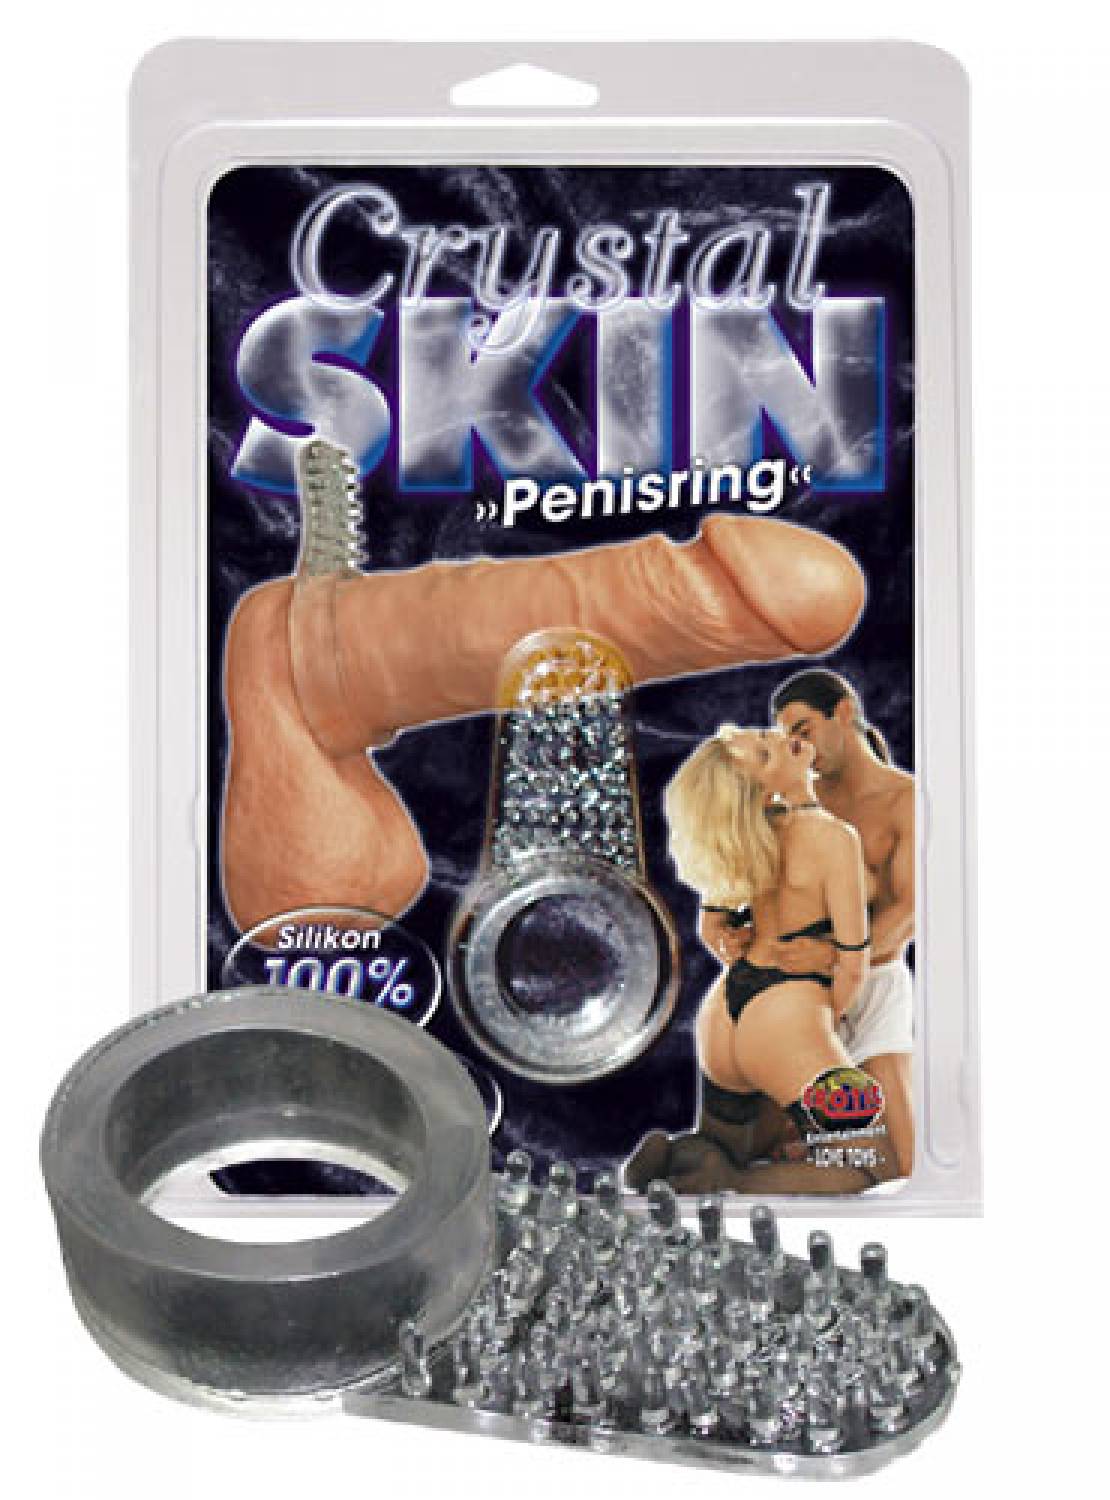 Erotic Entertainment Love Toys Penisring "Crystal Skin"